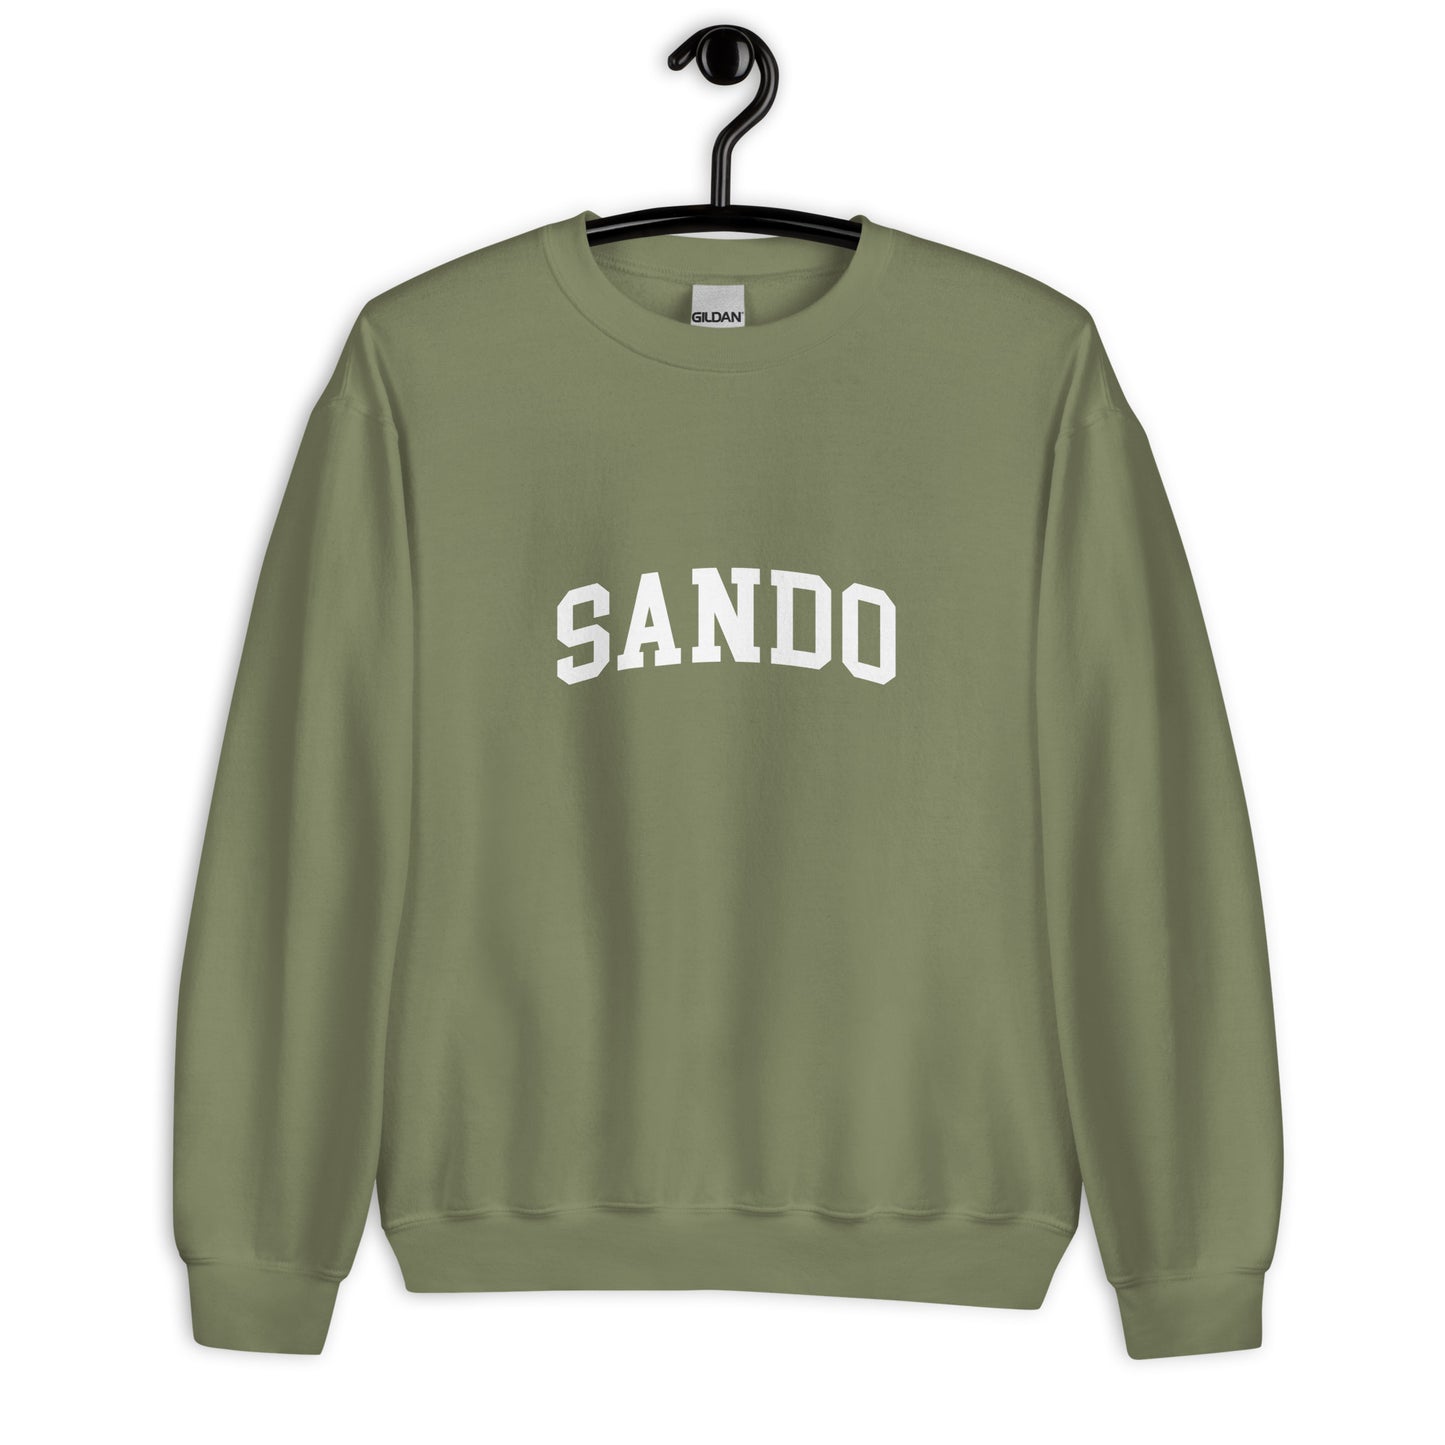 Sando Sweatshirt - Arched Font